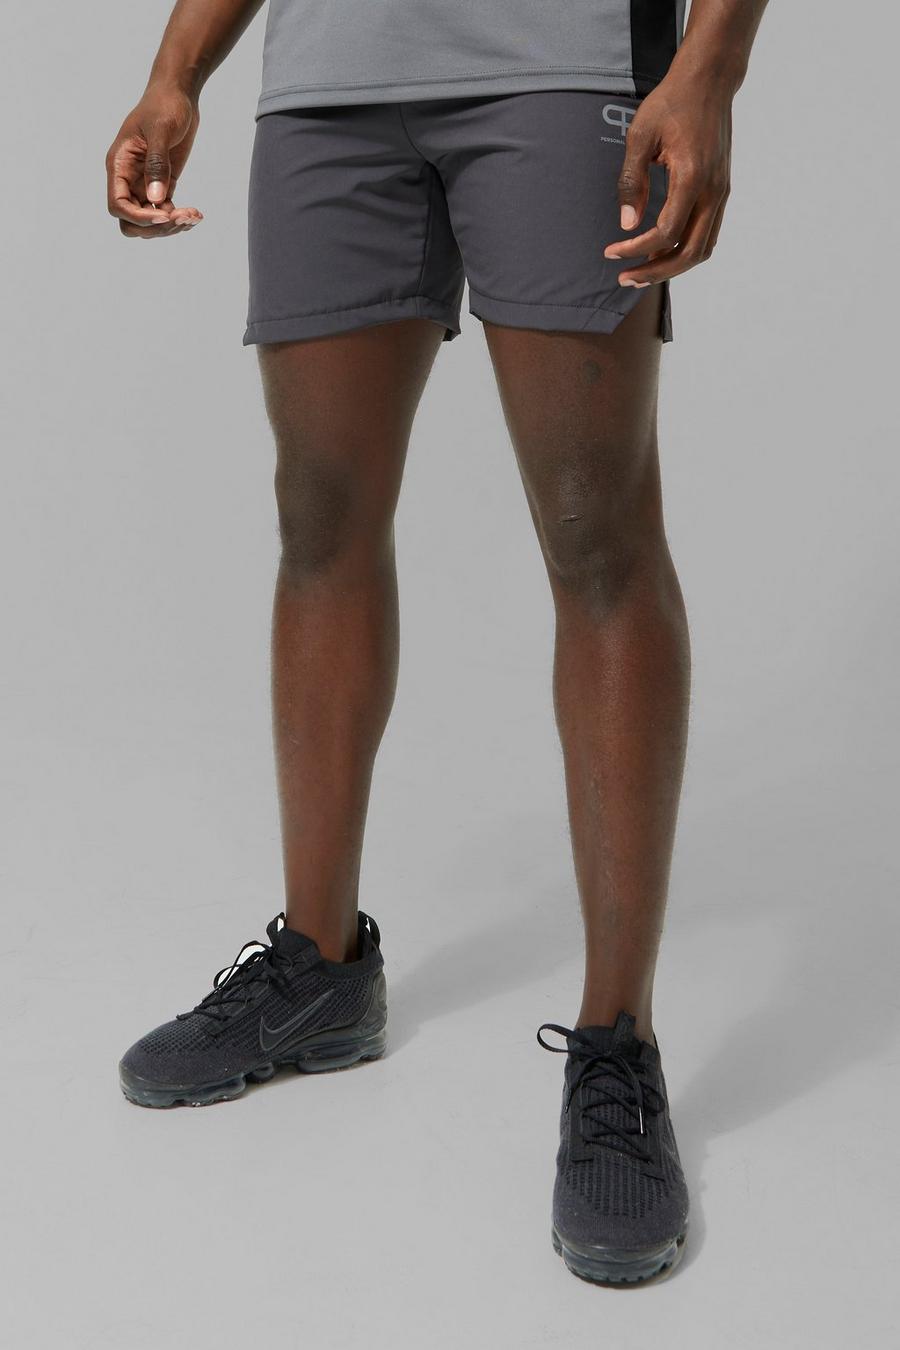 Man Active X Pr Performance Gym Shorts, Charcoal gris